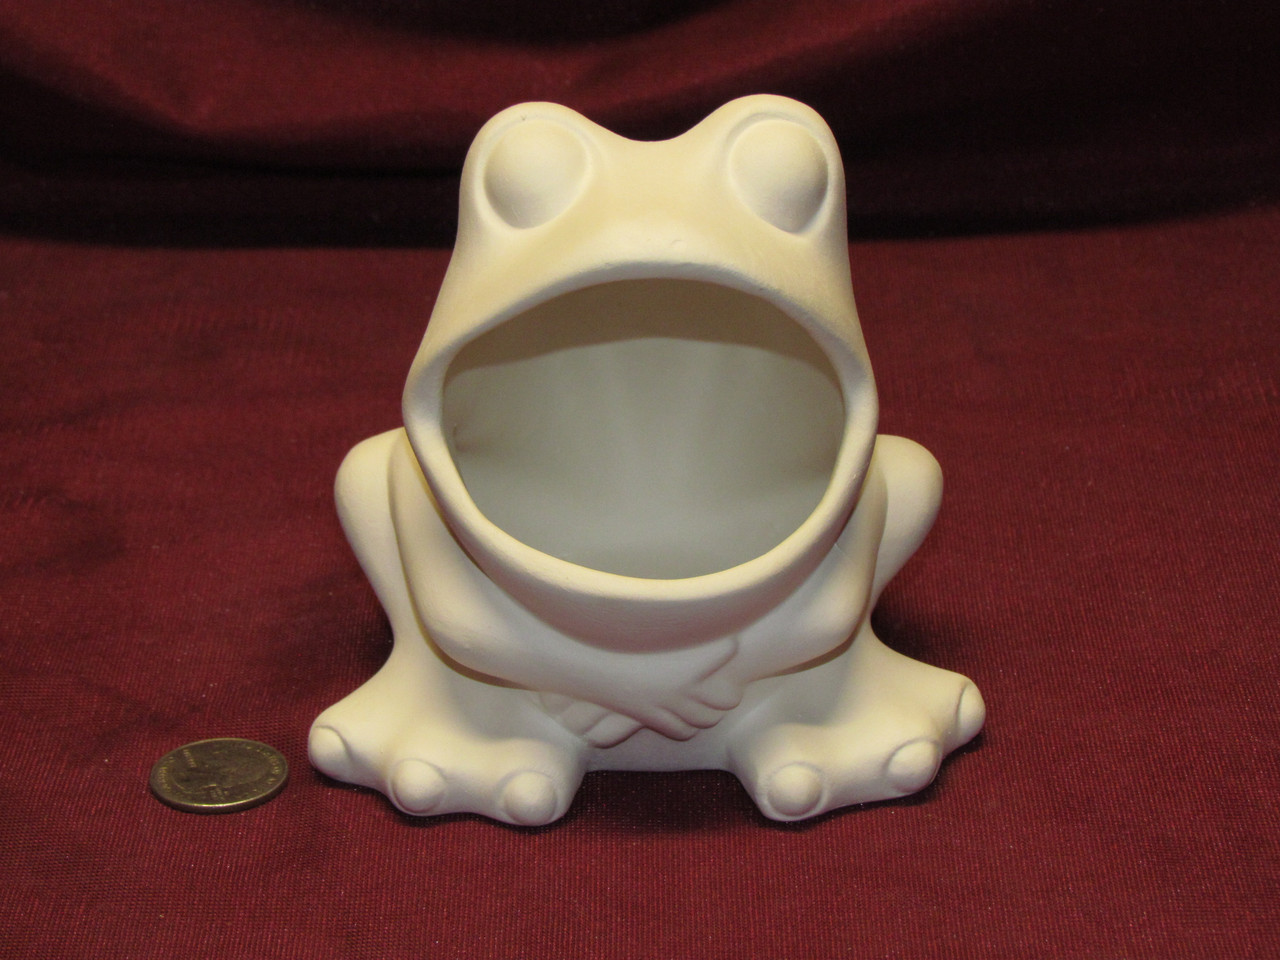 Ceramic Kitchen Scrubby Sponge Holder, Art Frog Collection, Adorable Home &  Kitchen Decor